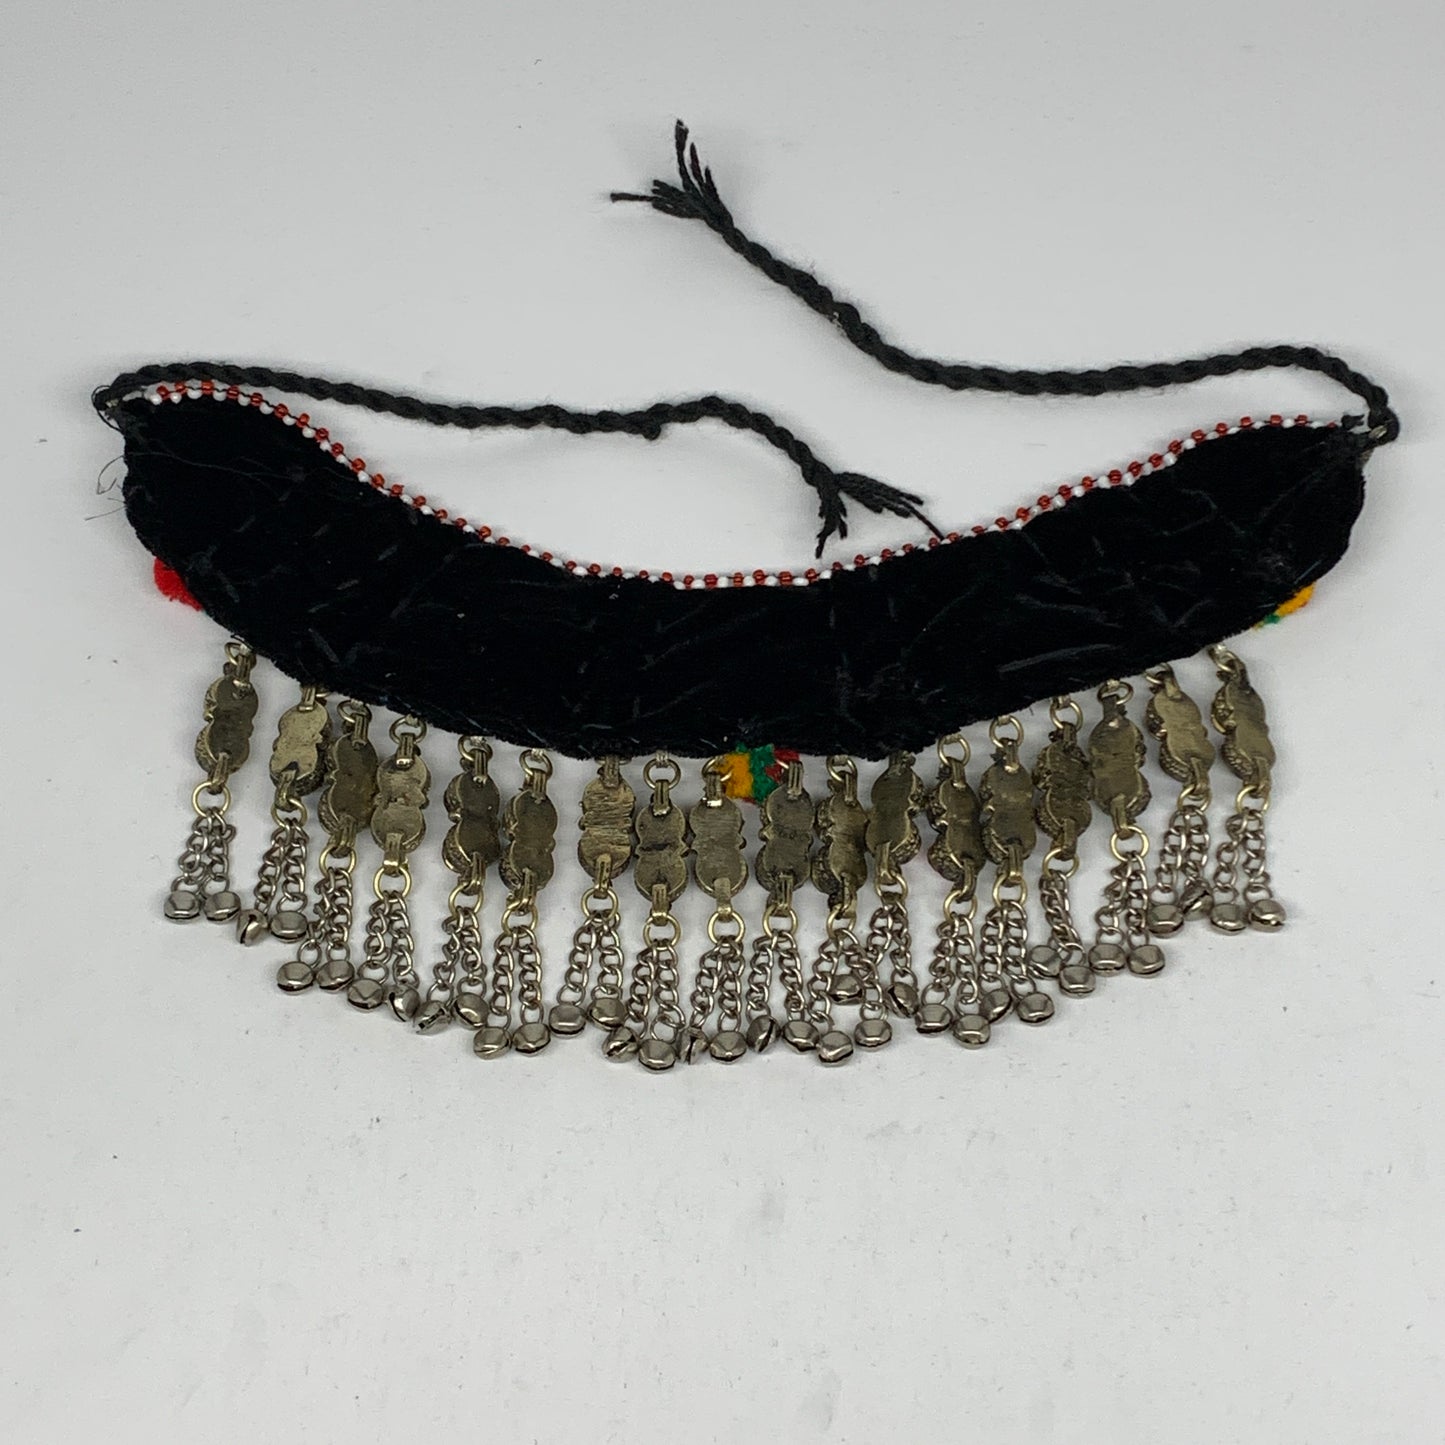 255g, 12"x4.5"Kuchi Choker Necklace Multi-Color Tribal Gypsy Bohemian,B14072